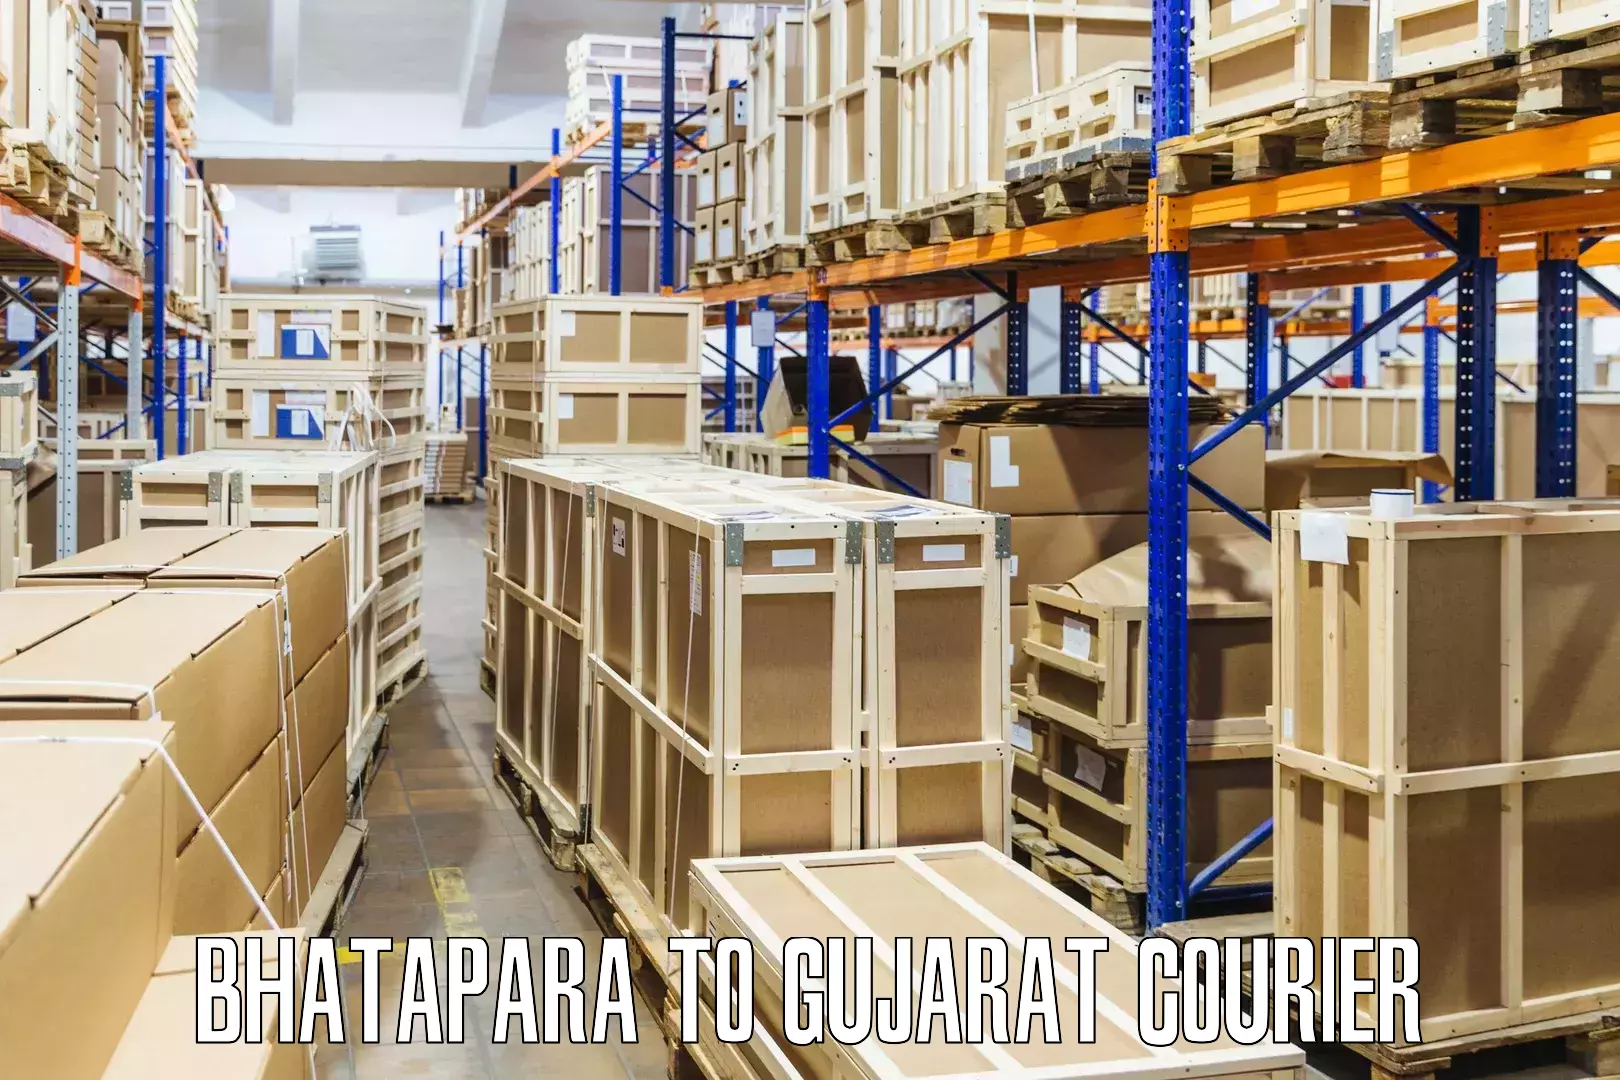 Optimized delivery routes Bhatapara to Dhasa